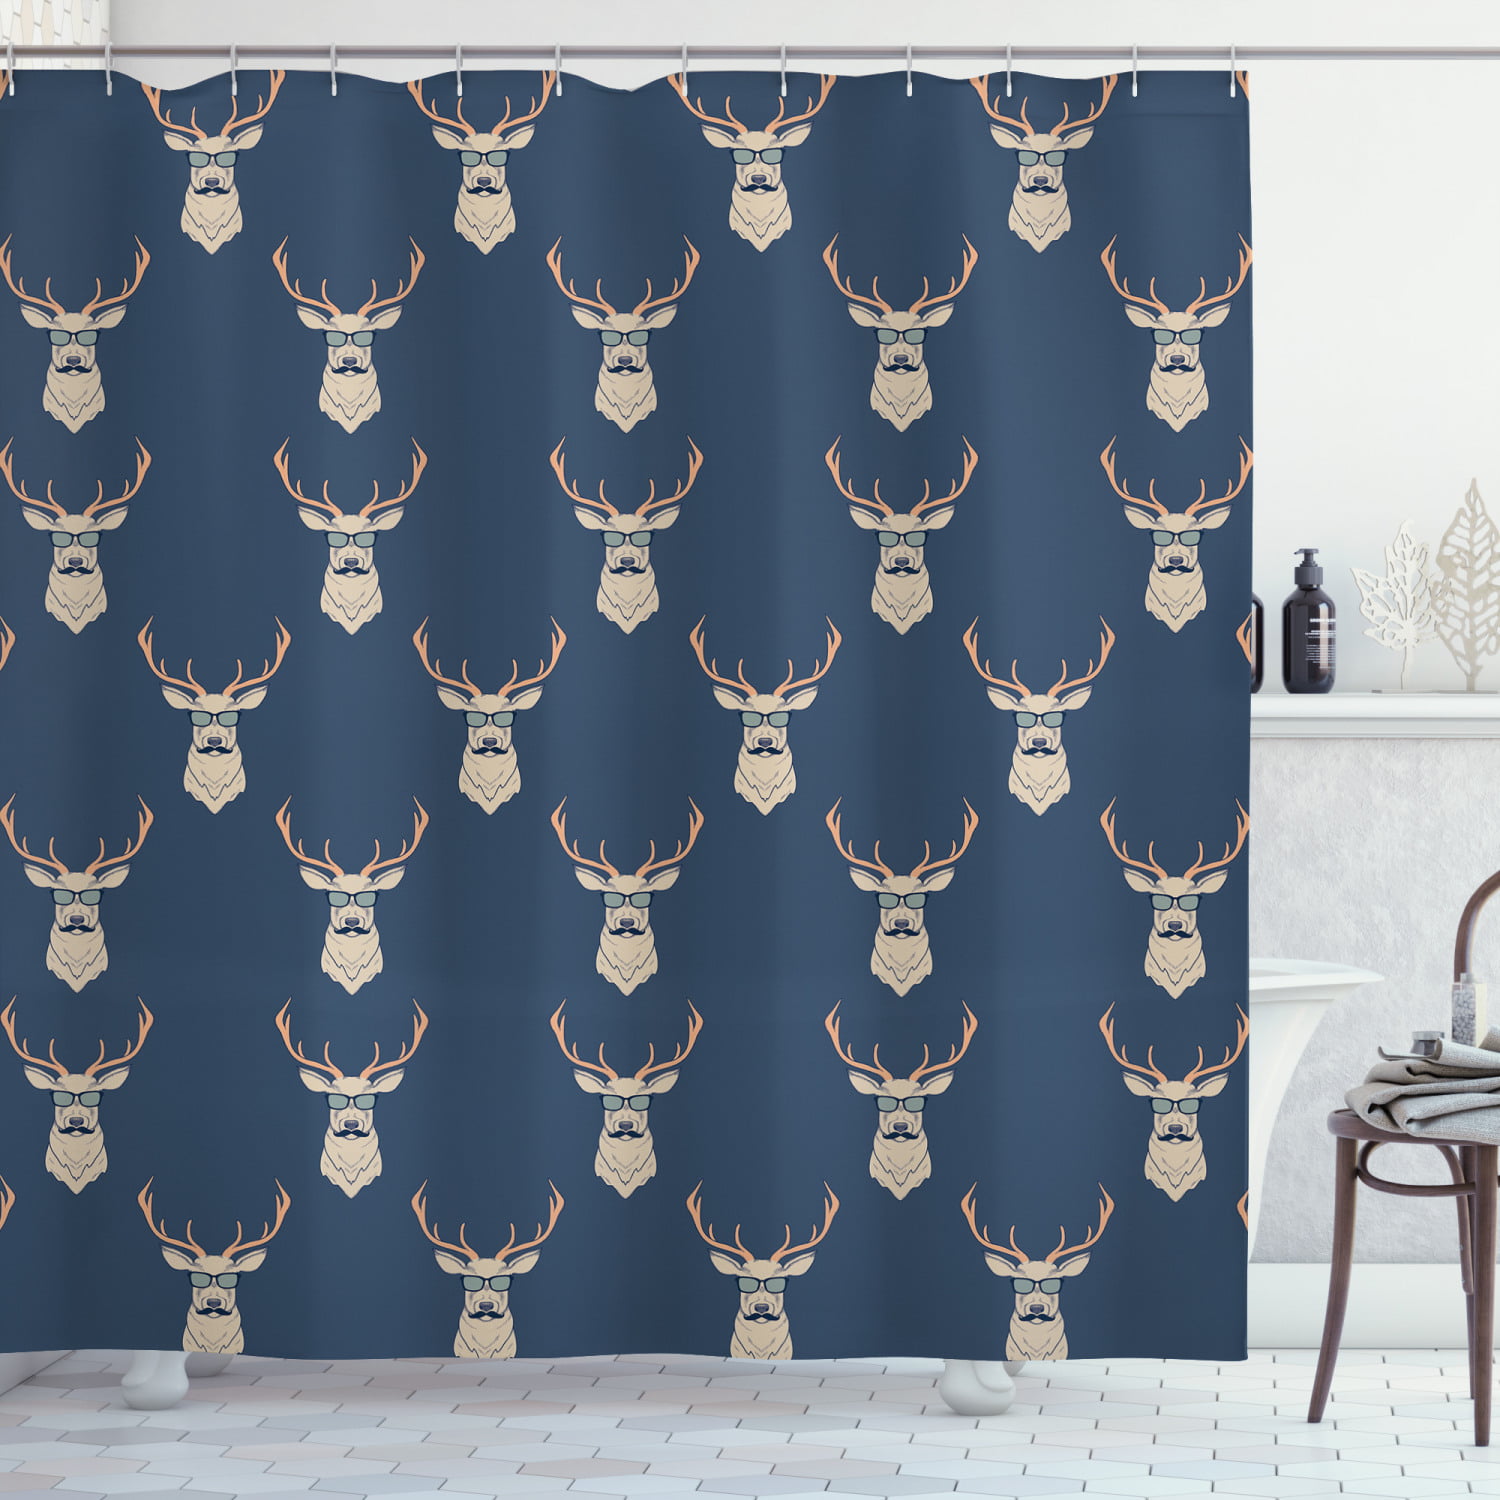 Waterproof Nordic Deer on Natural Wood Shower Curtain Bathroom Decor Mat Hooks 